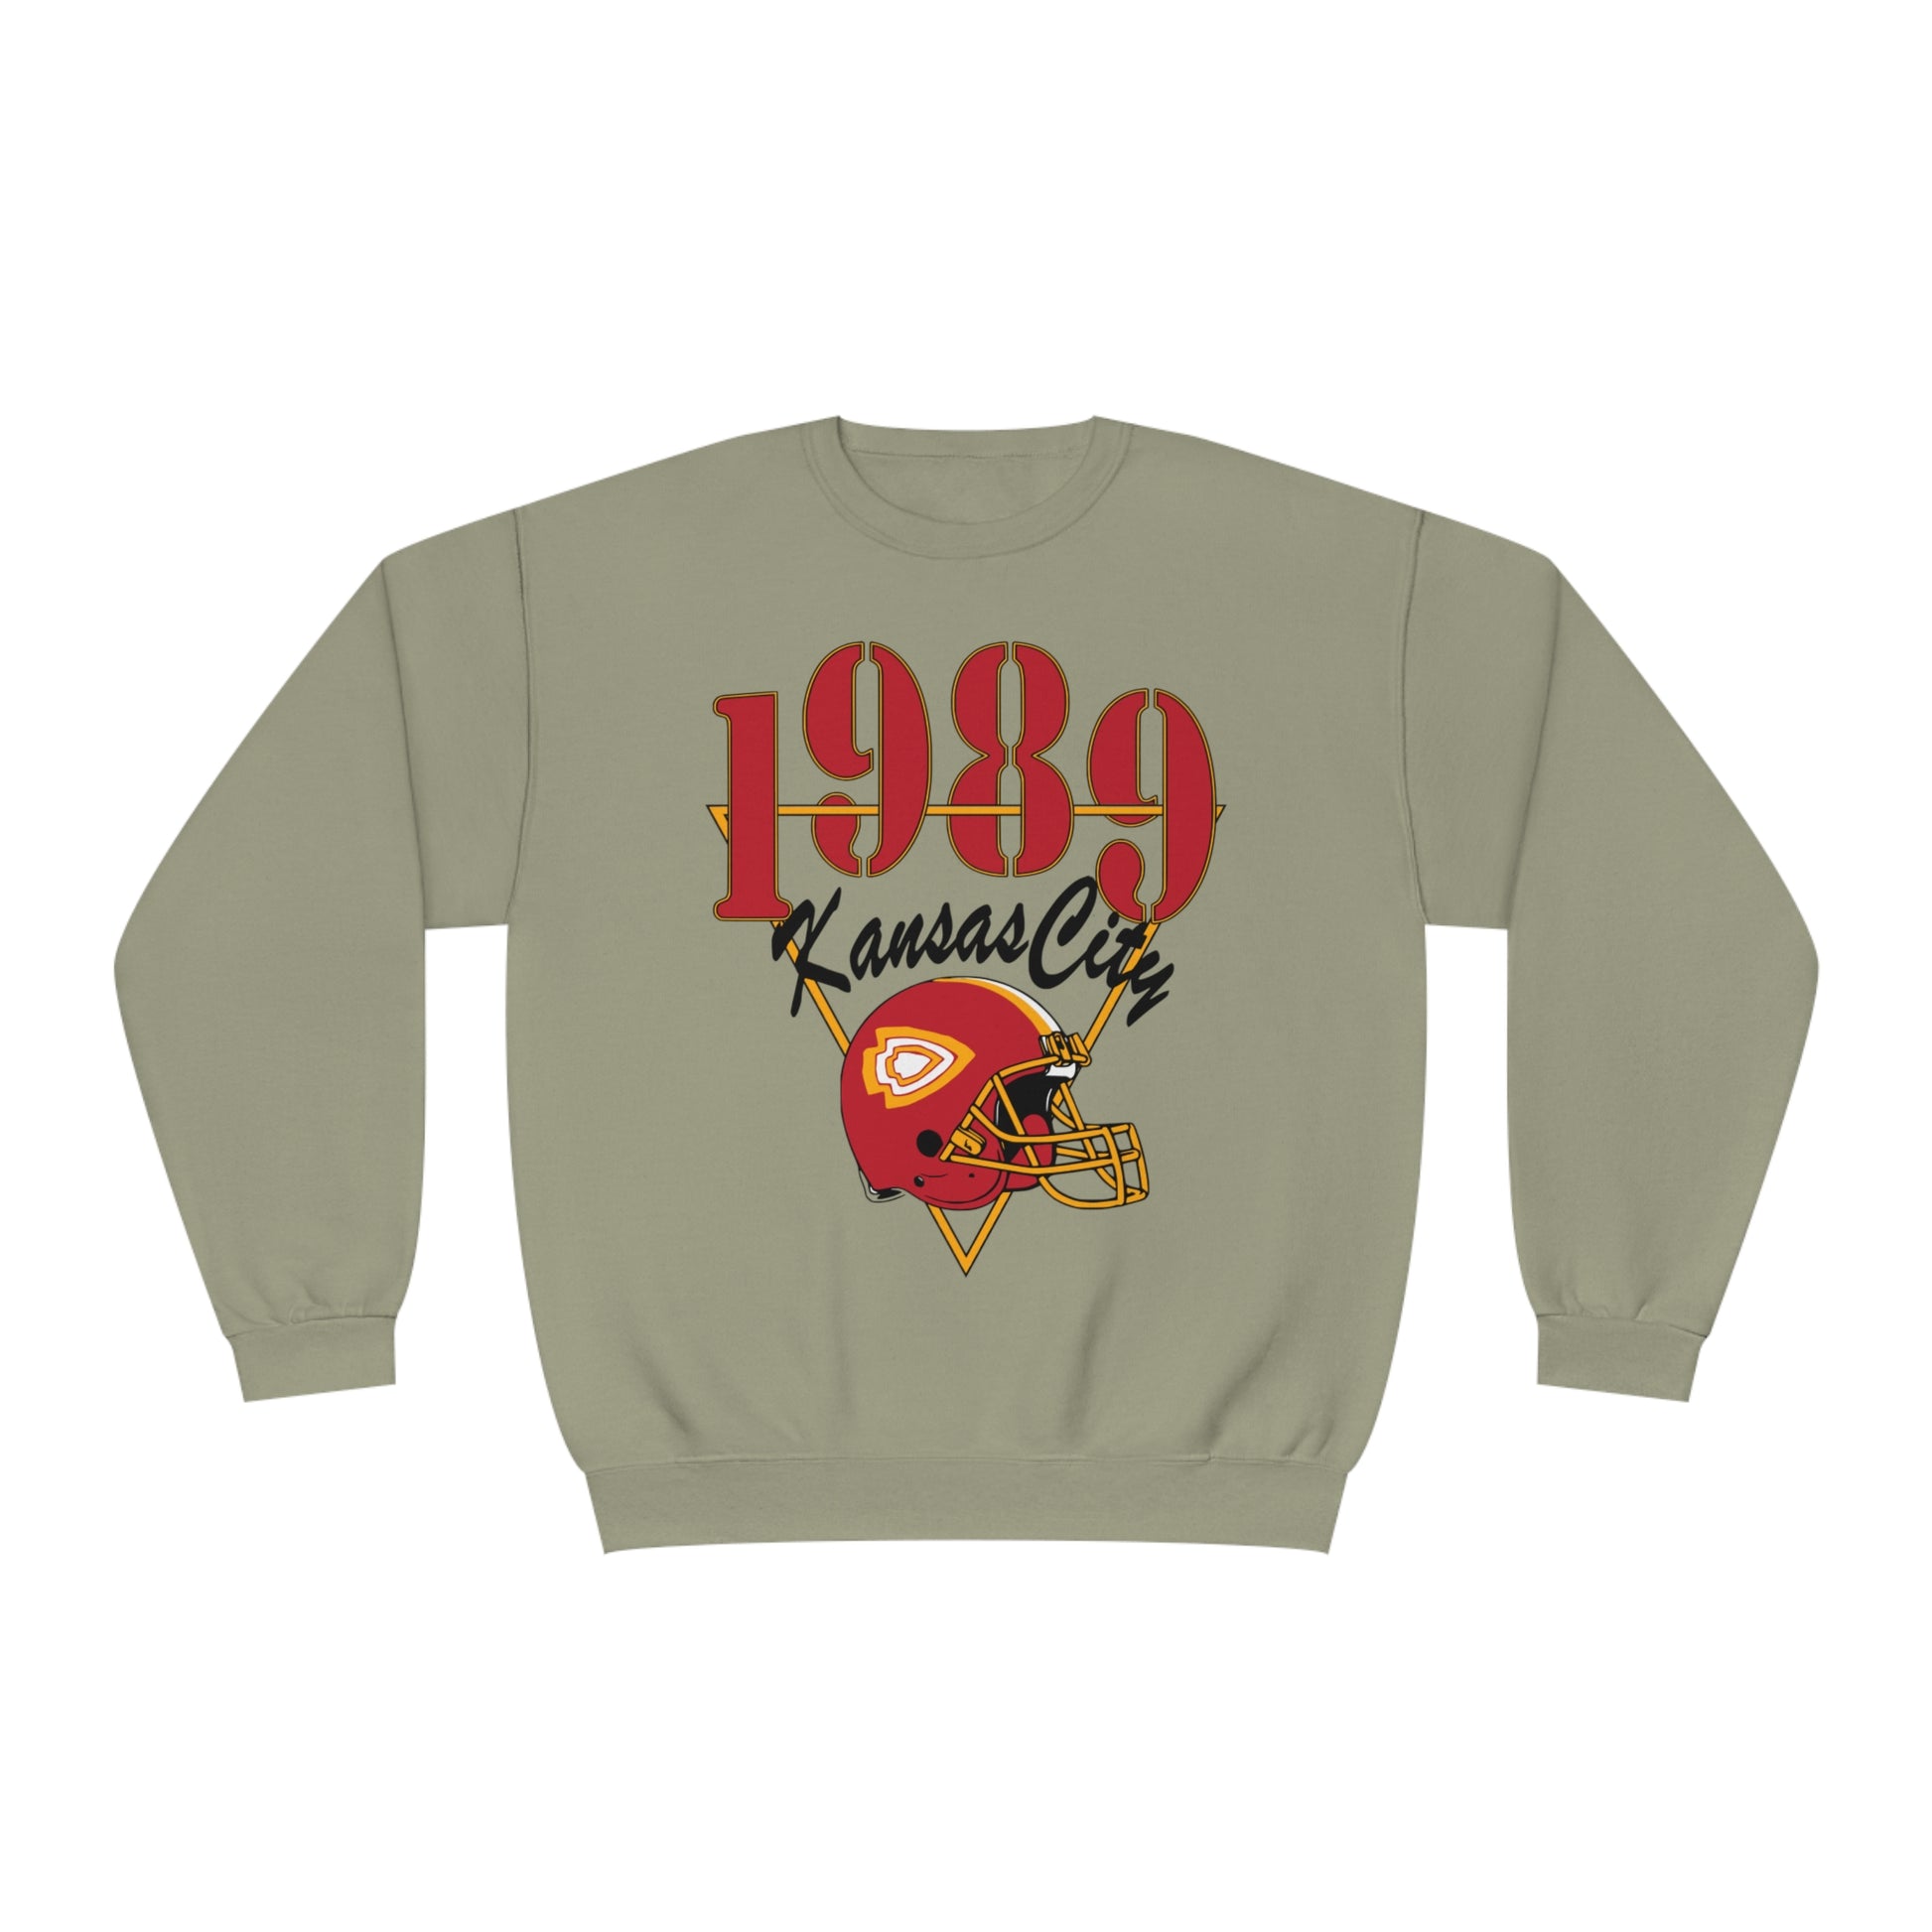 1989 Kansas City Chiefs Football Crewneck Sweatshirt - Vintage Retro Arrowhead Style - 1989 Version Chiefs Taylor Swift Khaki